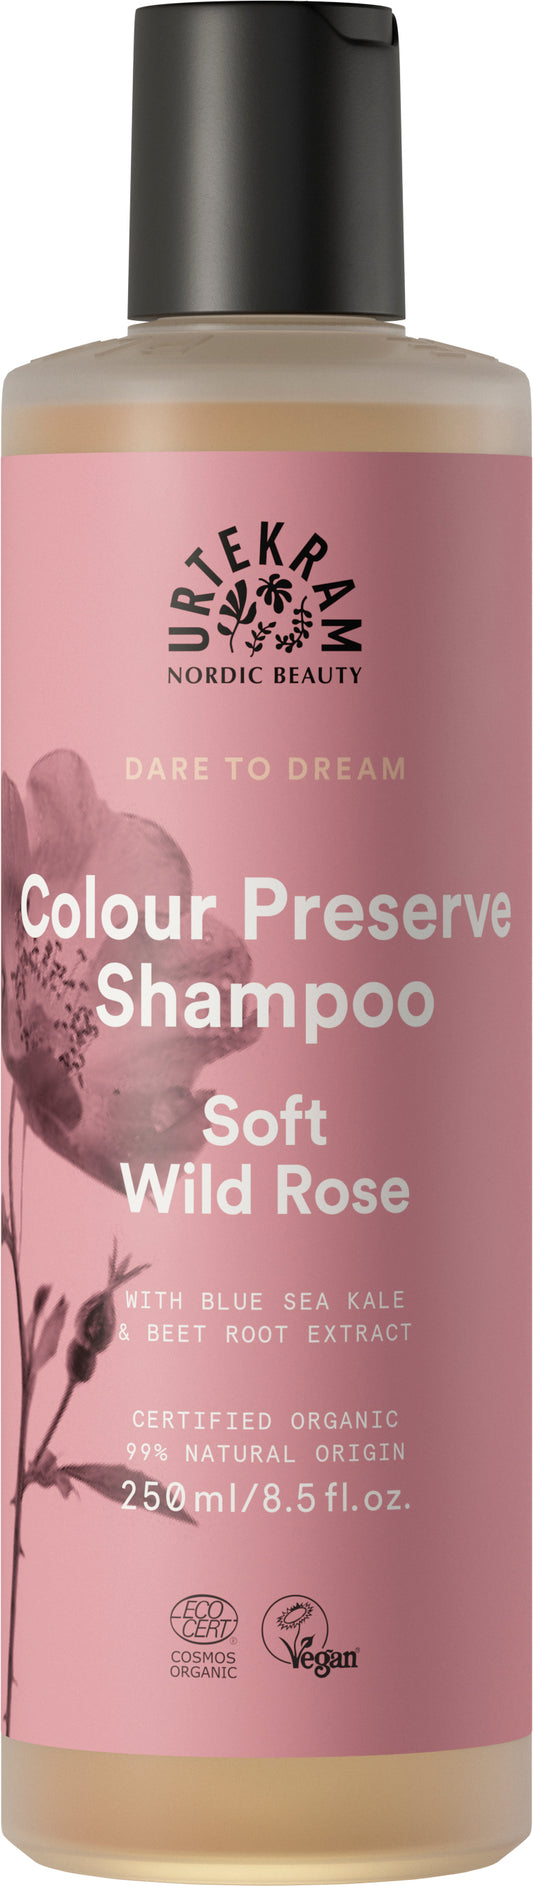 Urtekram Soft Wild Rose Colour Preserve Shampoo 250ml